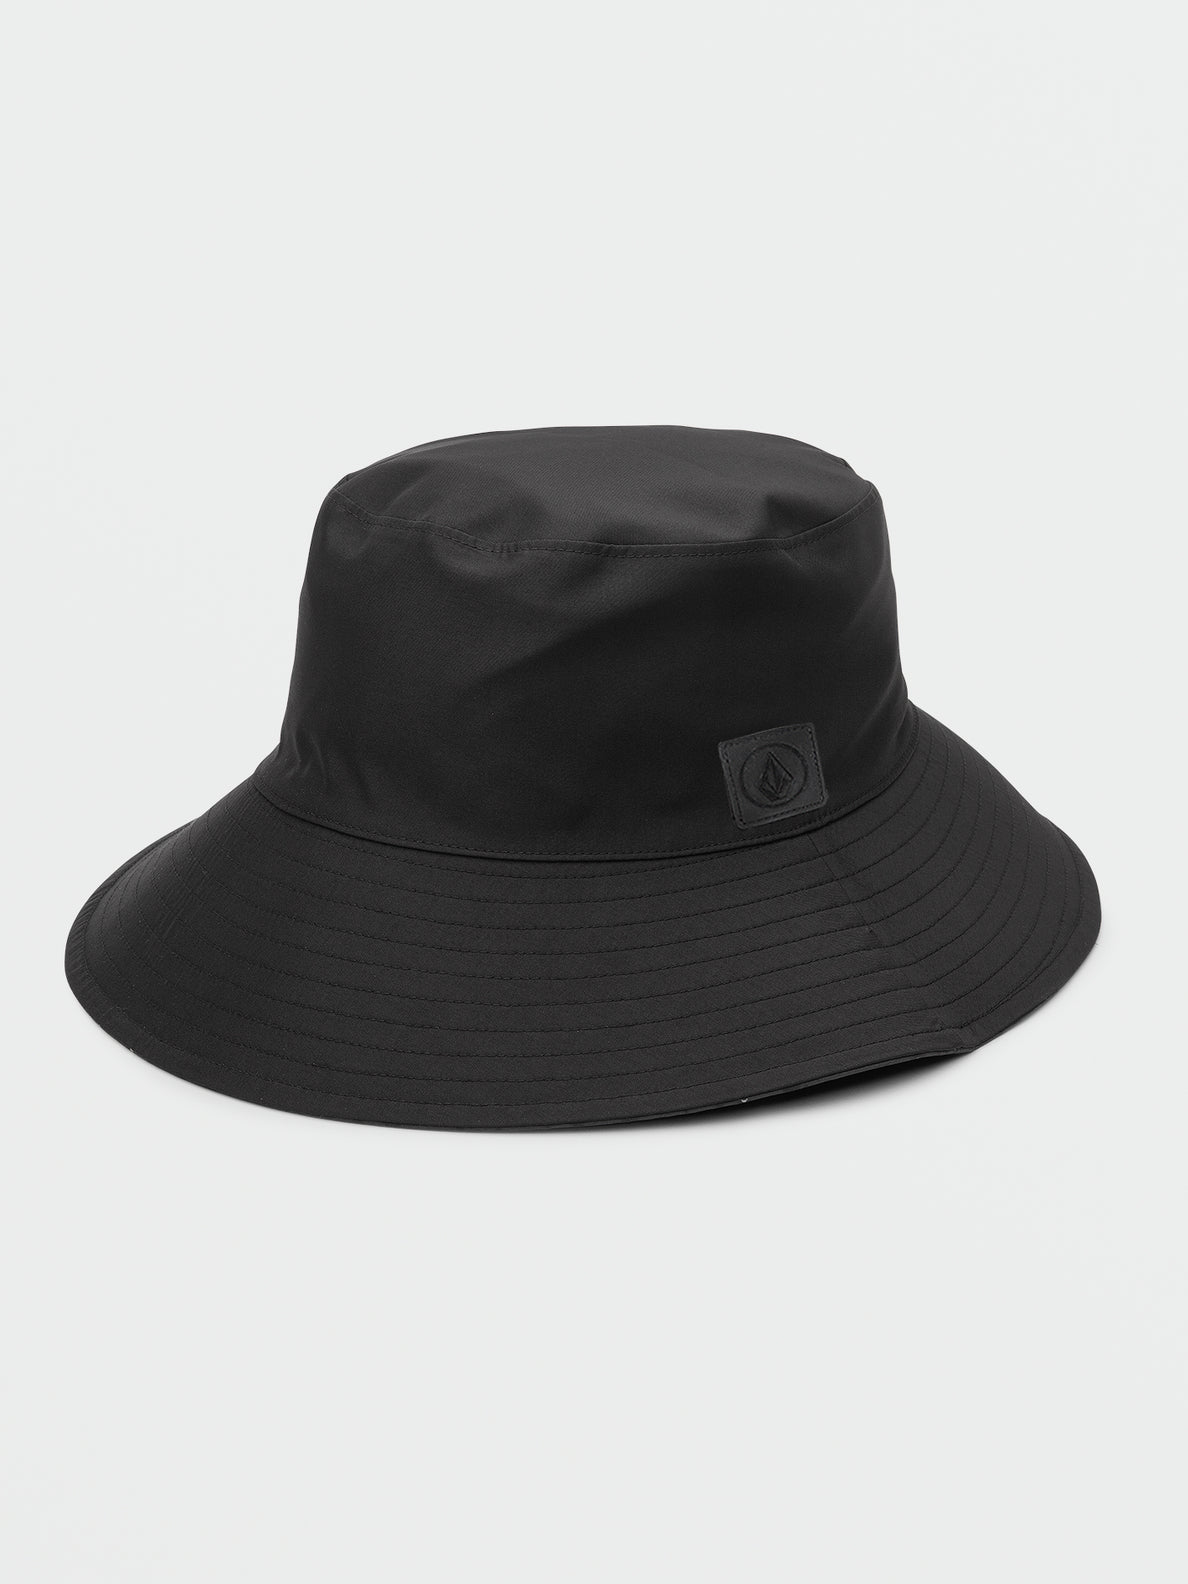 Pack Bucket Hat - Espresso (E5532200_ESP) [1]